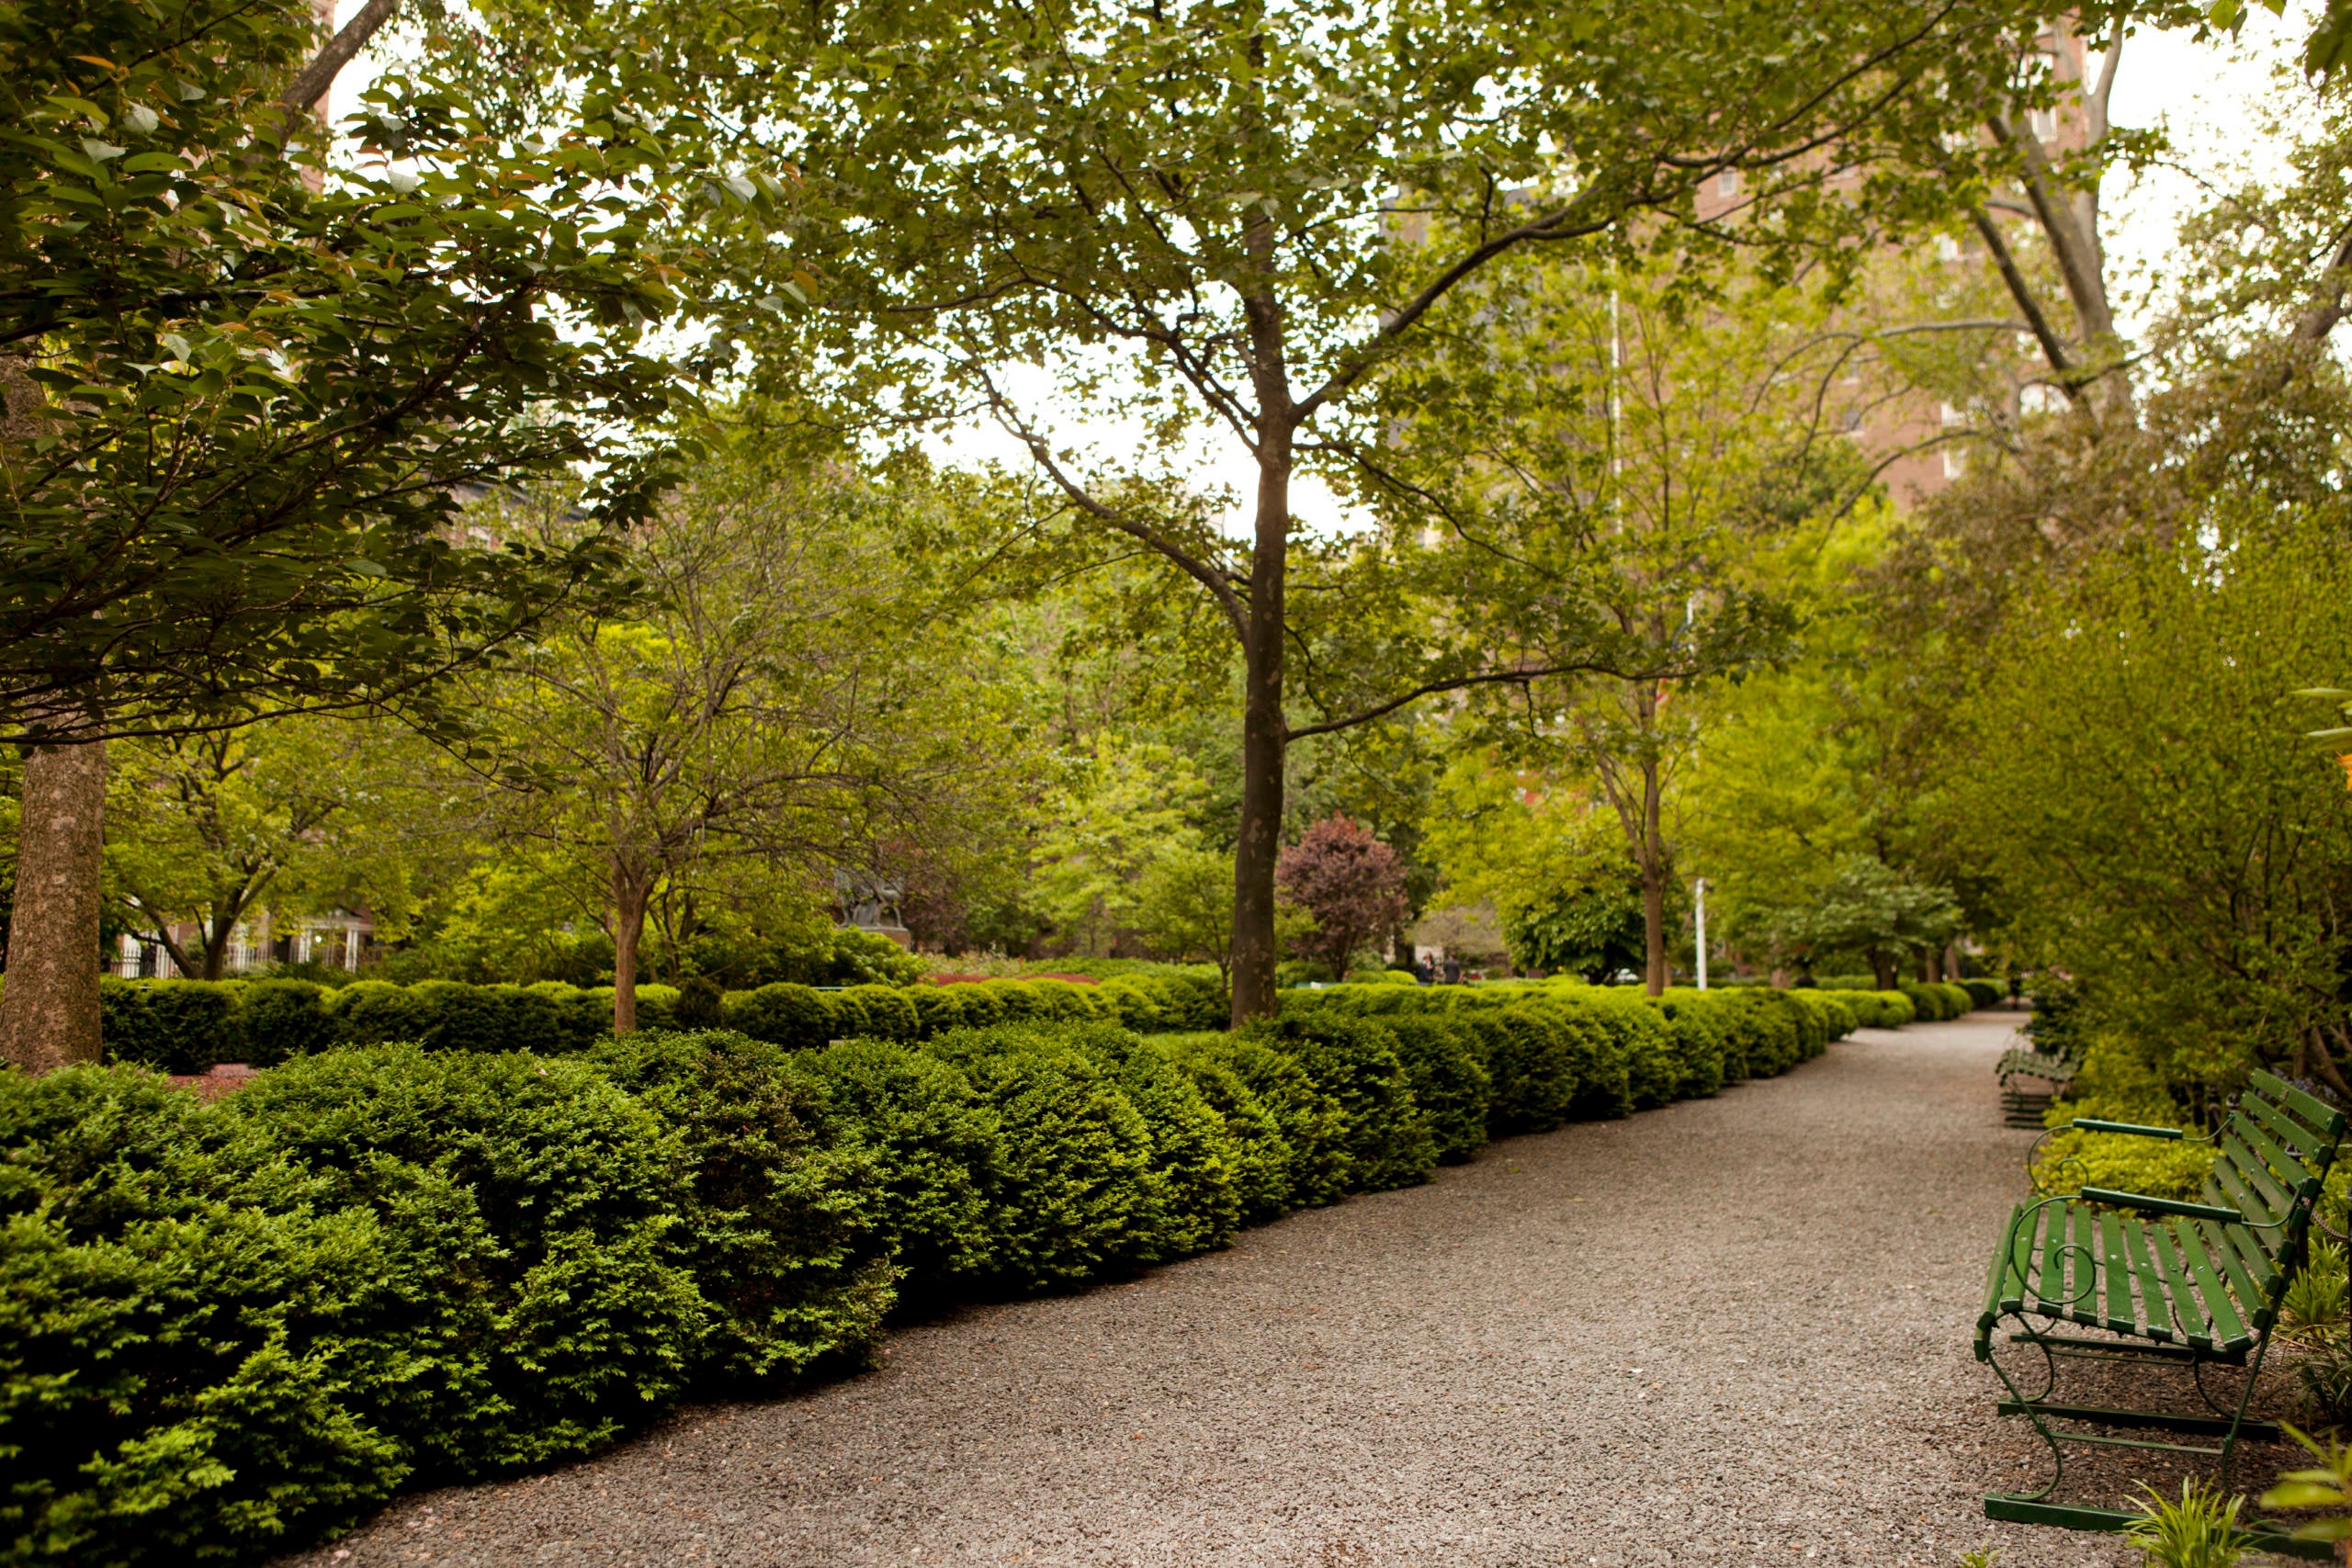 Gramercy Park in New York City